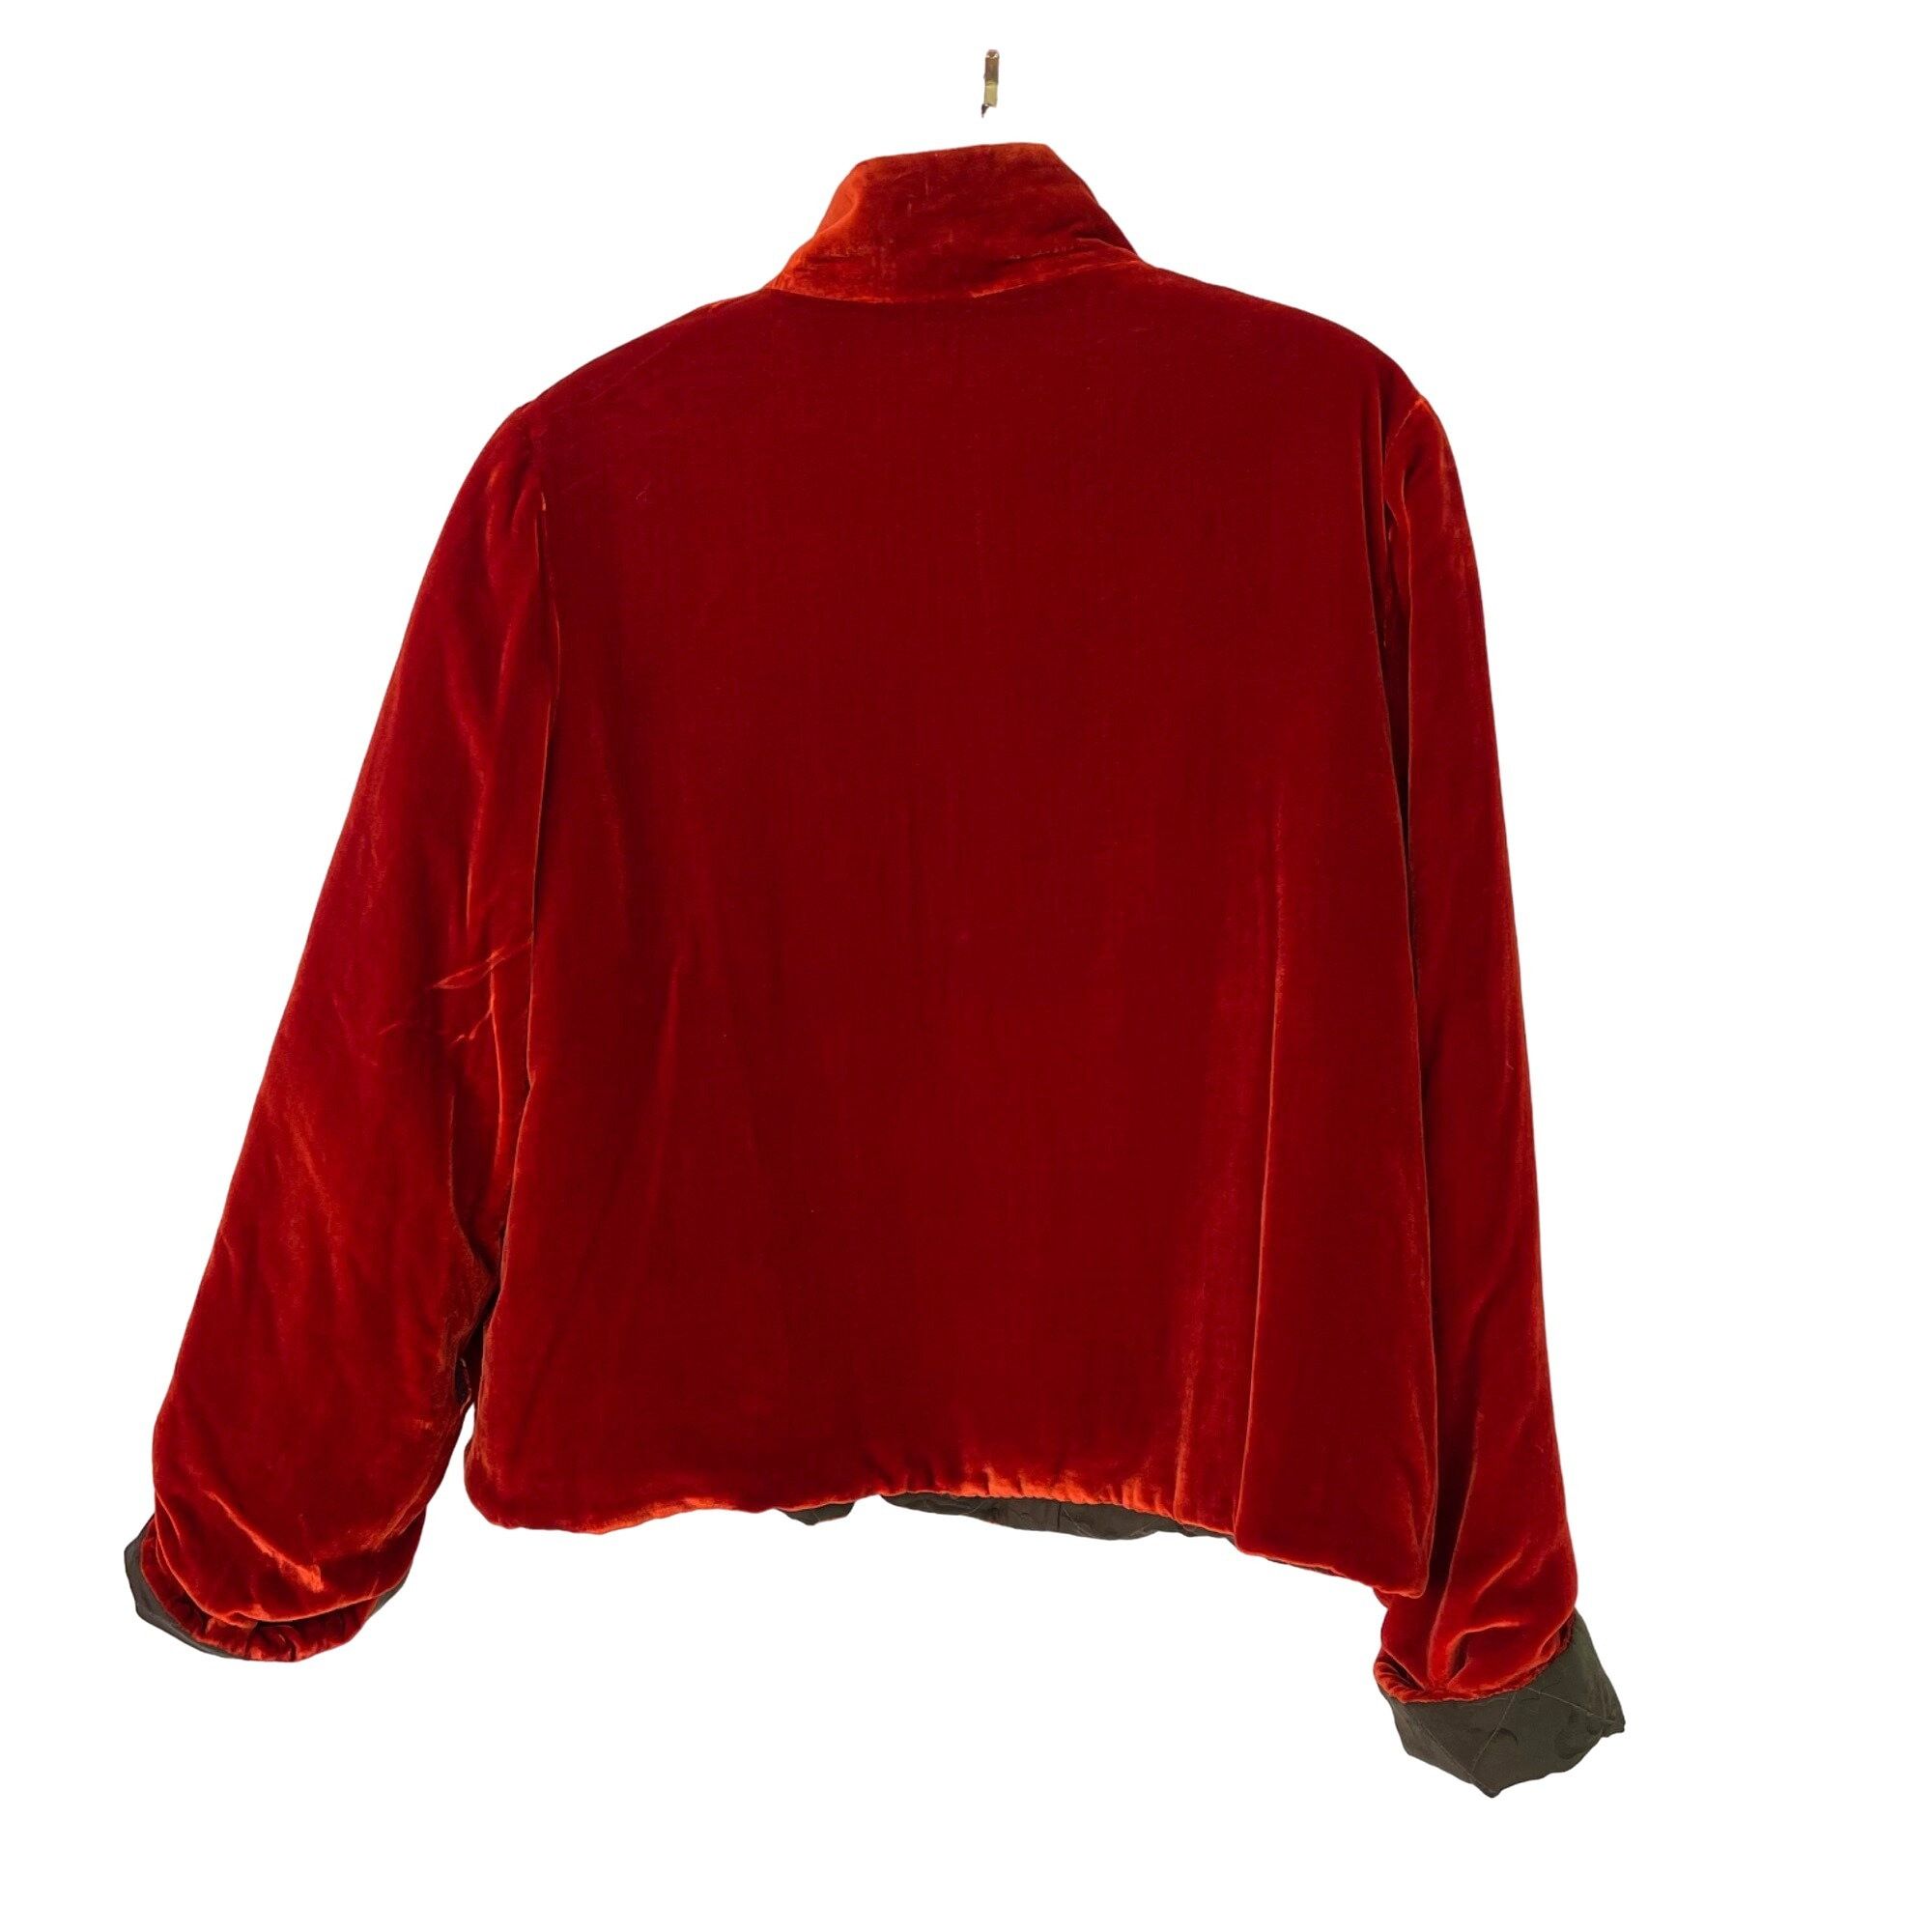 Vintage Vintage Womens Reversible Jacket Size Large Velvet Orange Size L / US 10 / IT 46 - 2 Preview